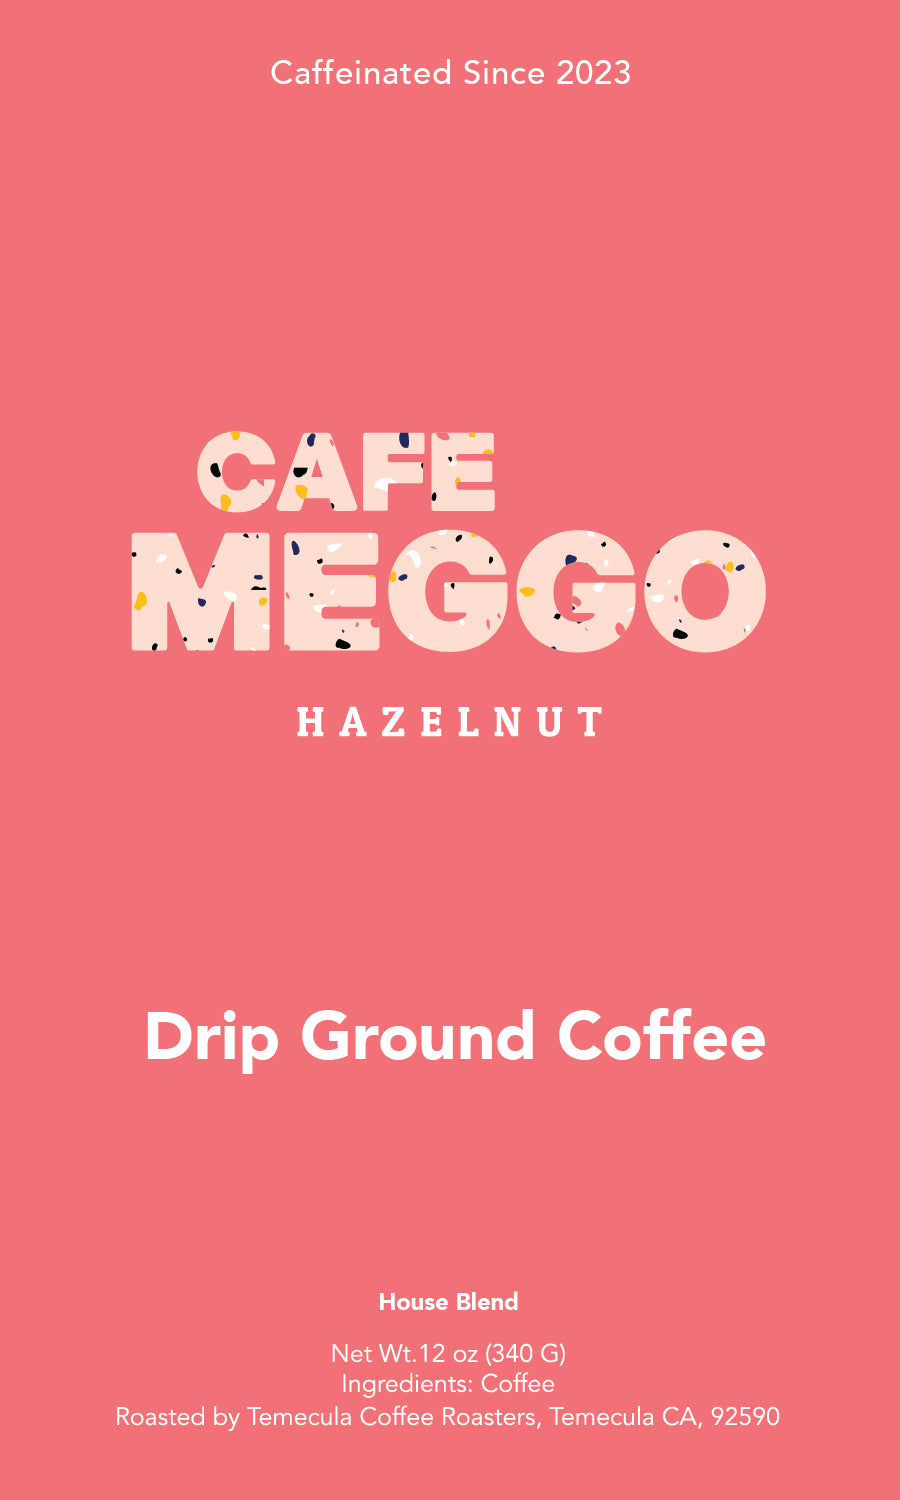 Cafe Meggo Hazelnut Coffee - Cafe Meggo